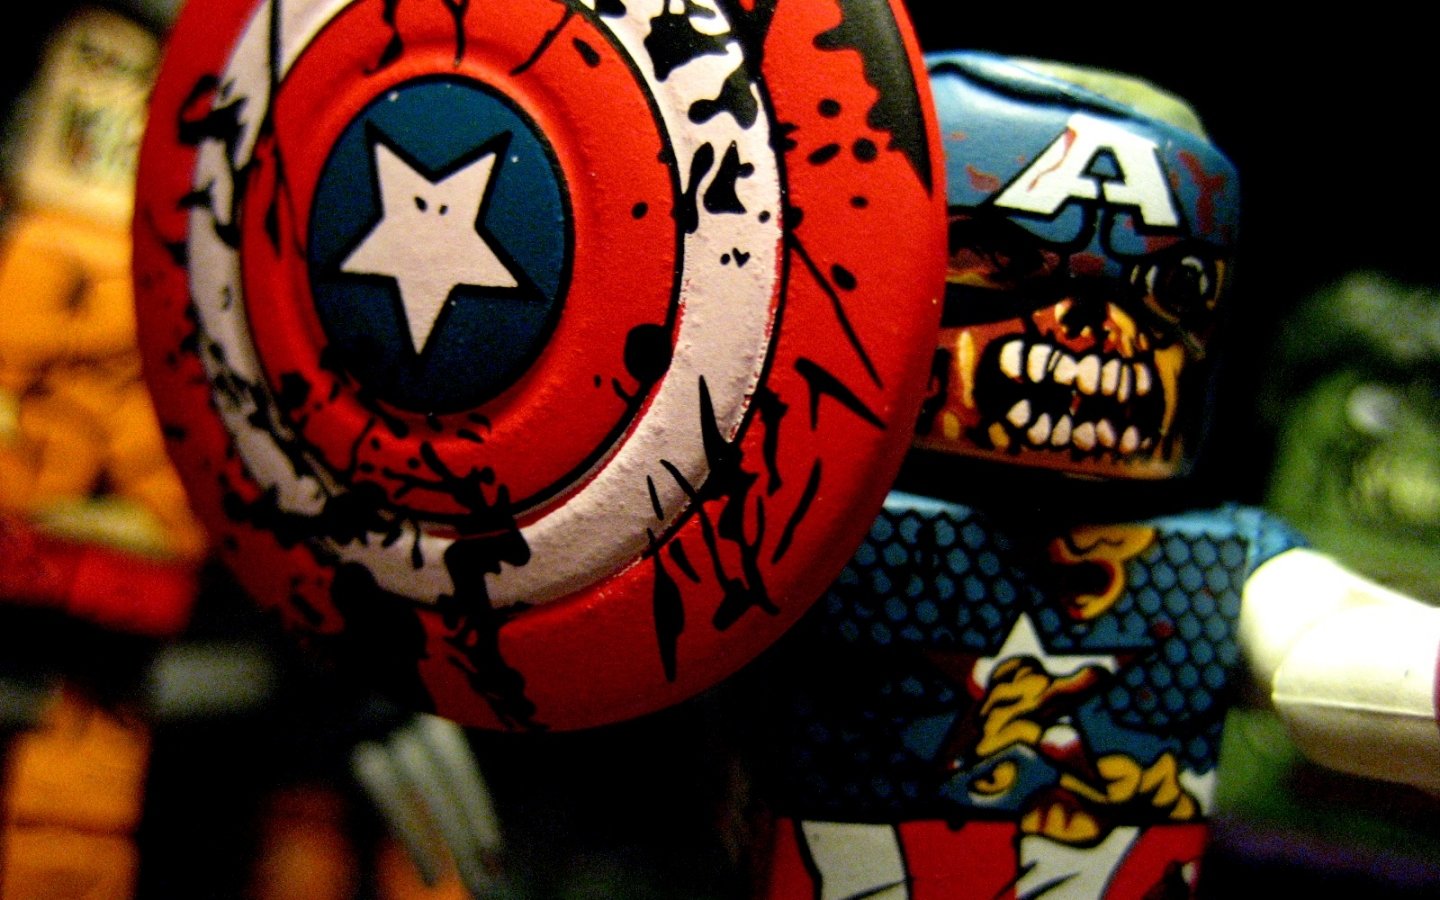 Best Captain America (Marvel comics) wallpaper ID:292887 for High Resolution hd 1440x900 computer